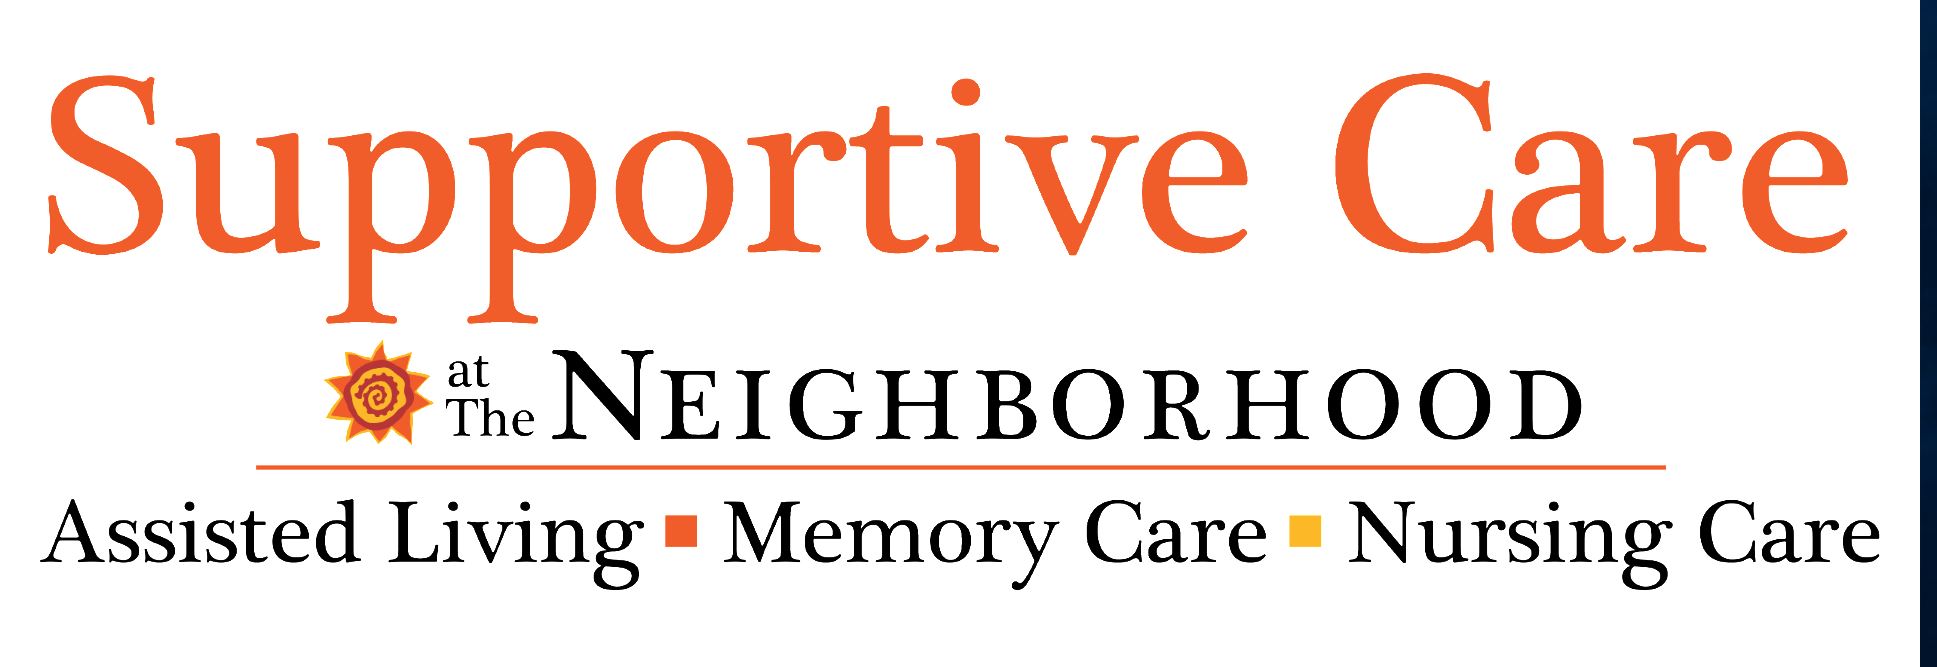 Haverland Carter Logo - Supportive Care.JPG